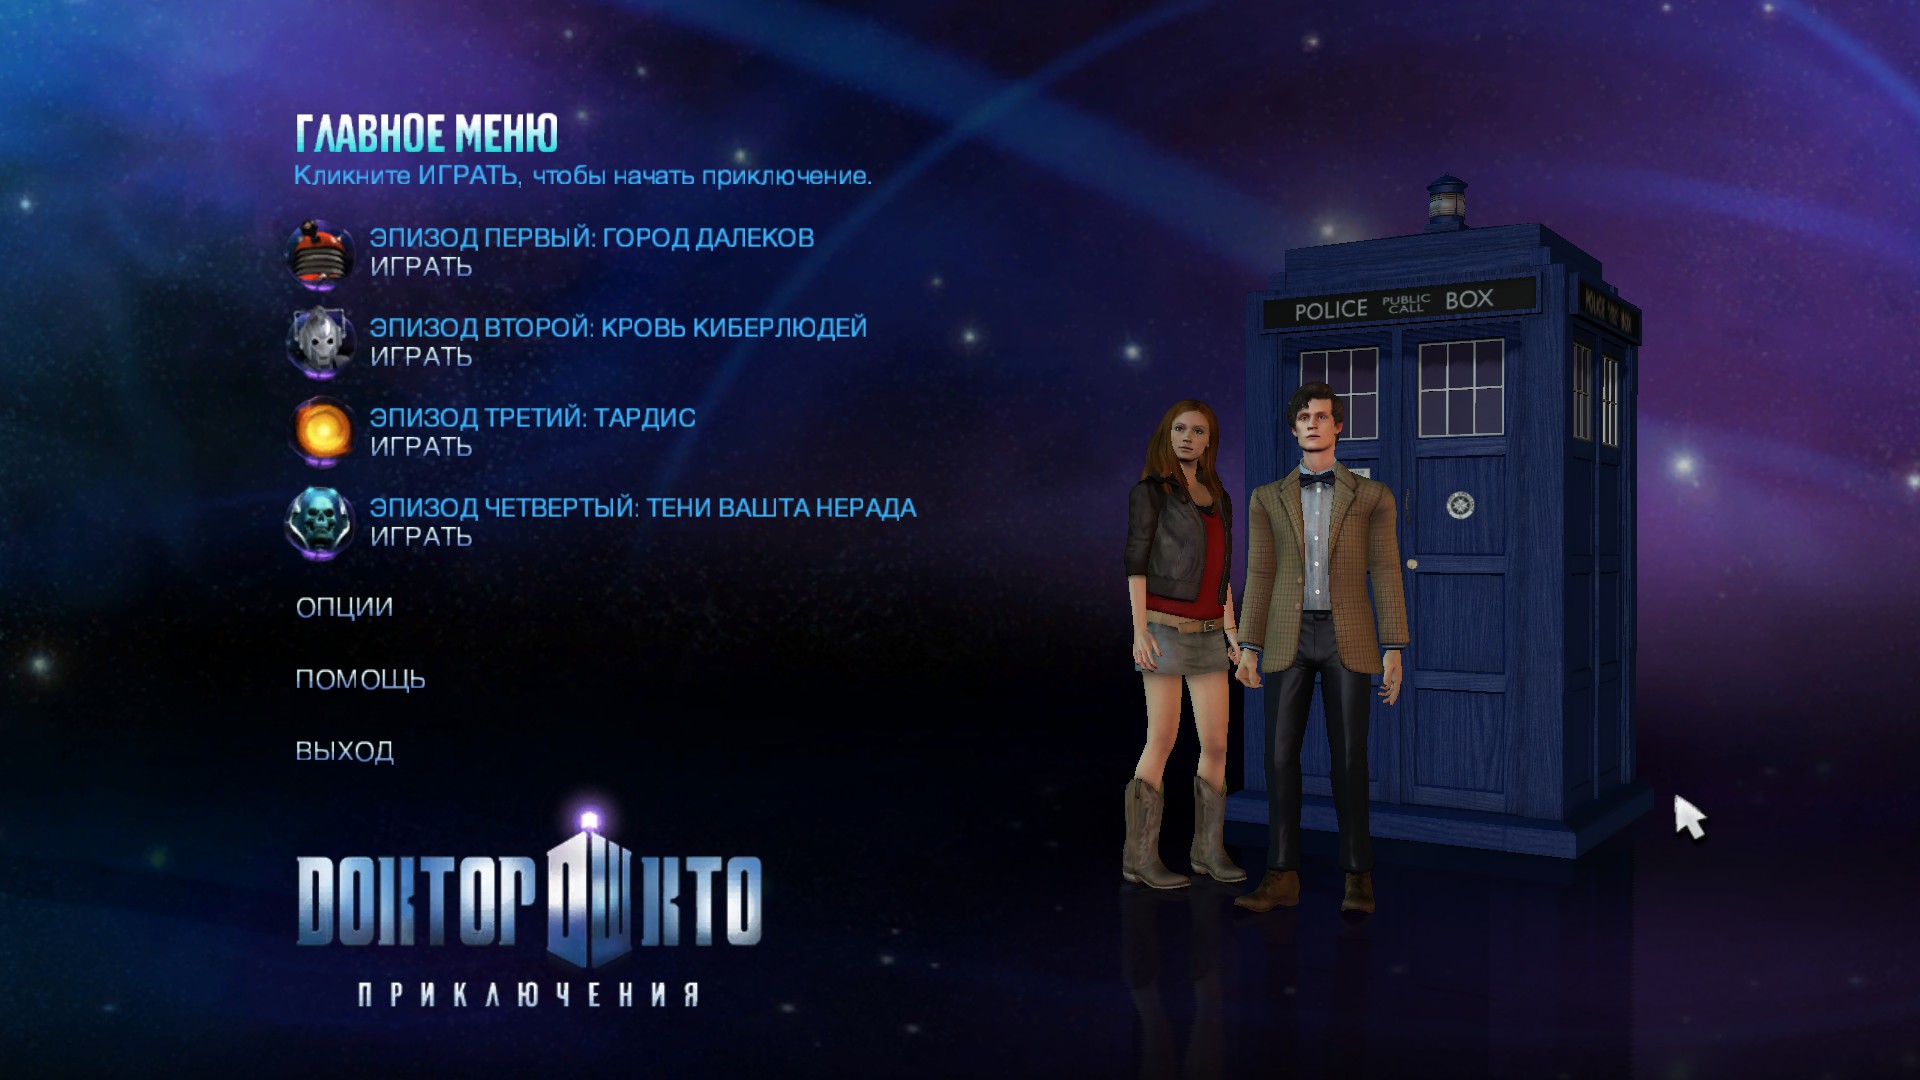 Adventures episode 1. Doctor who игра. Доктор кто Adventure games. Игры по доктору кто. Доктор кто игра на ПК.